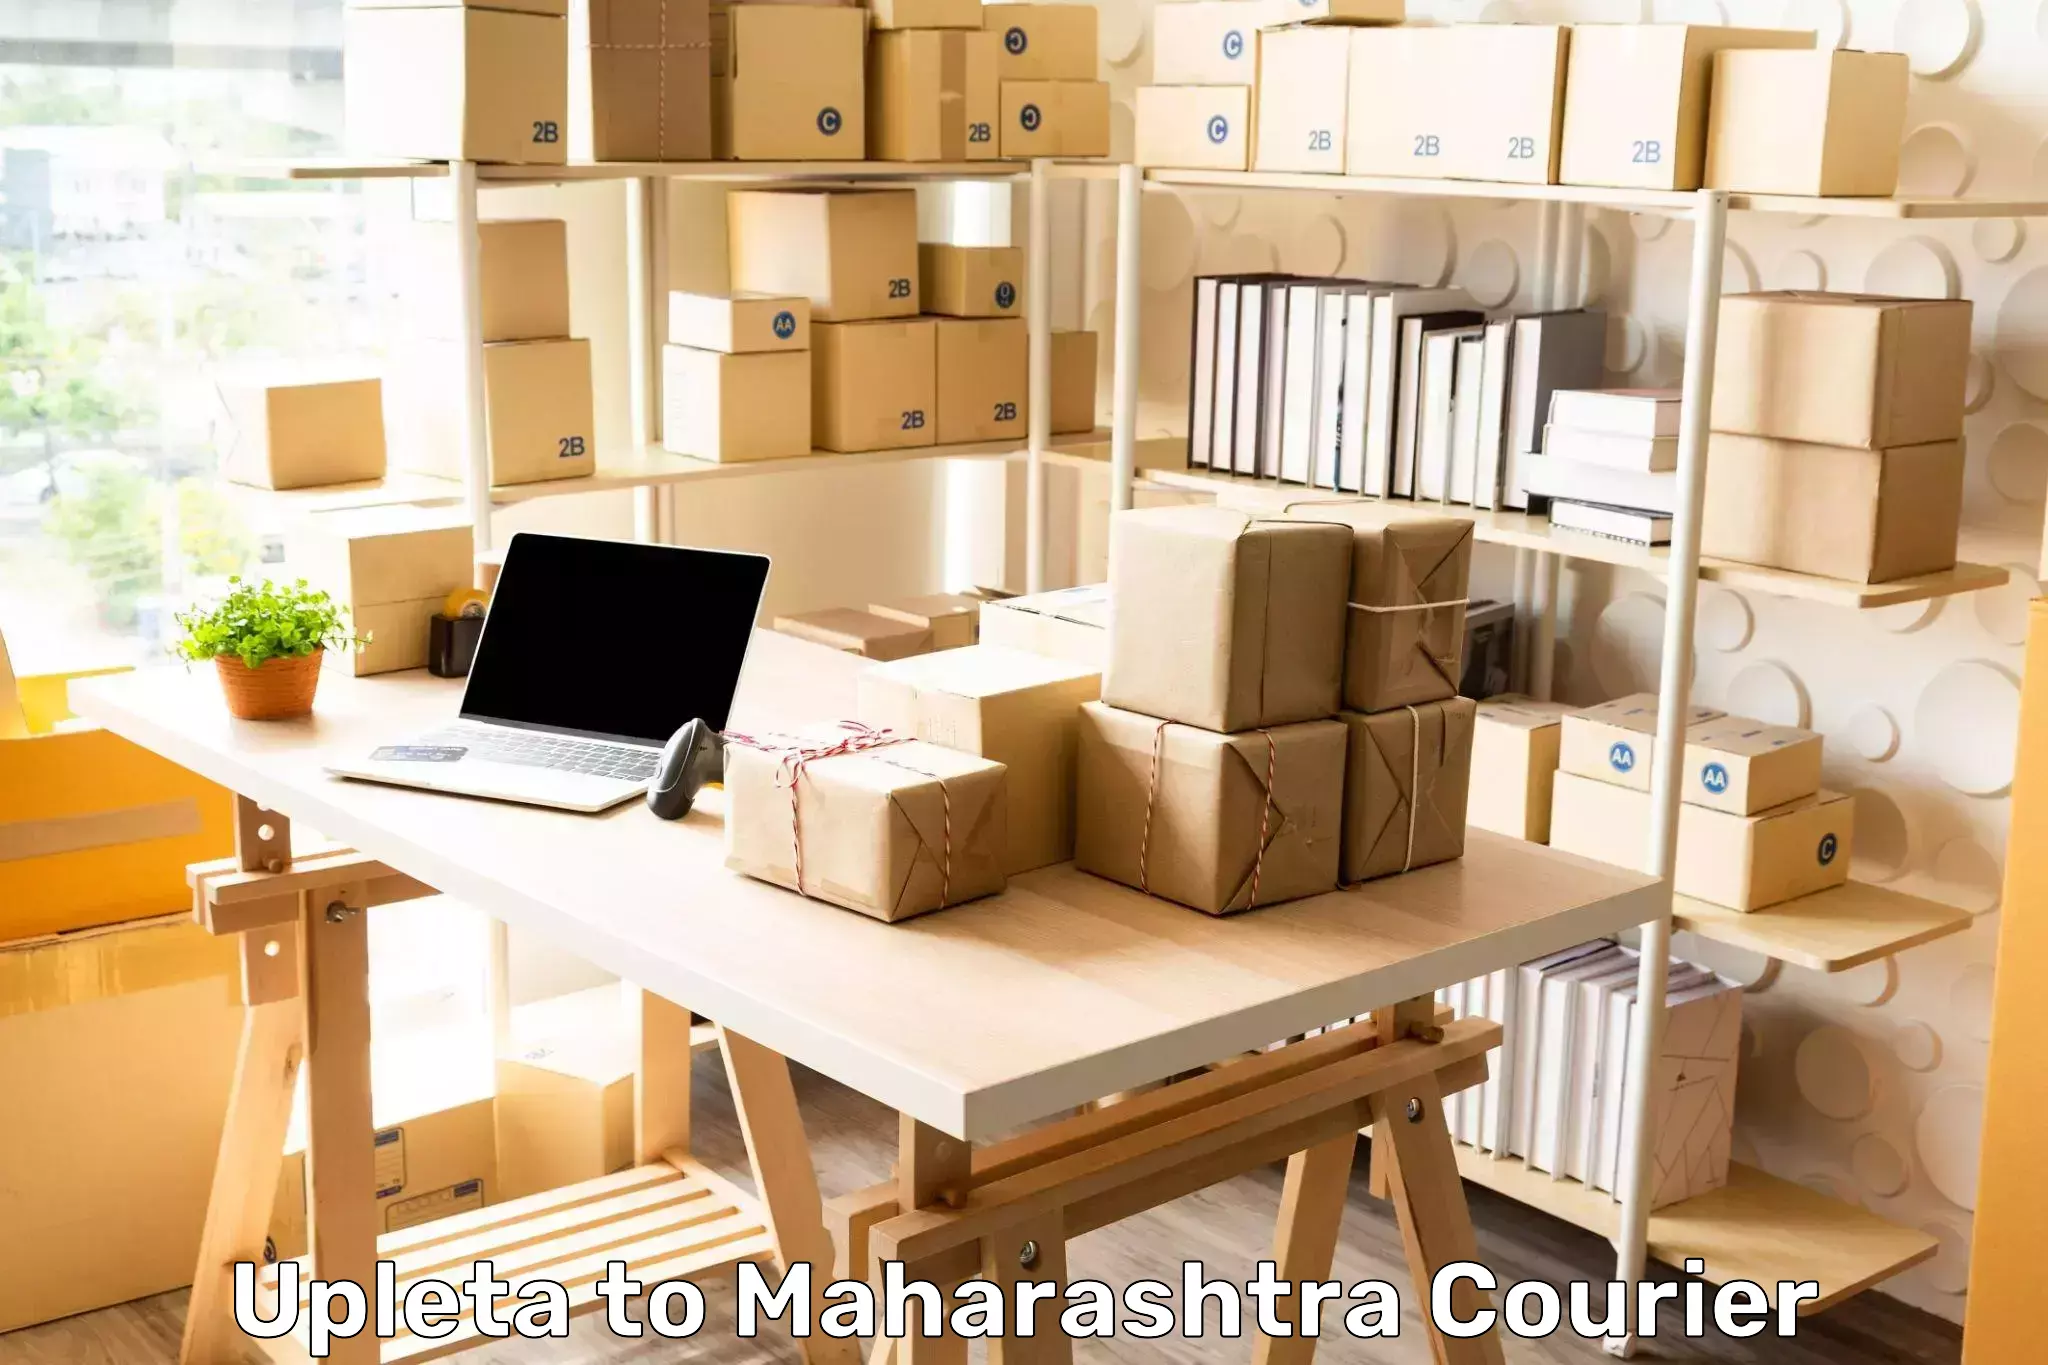 Courier service comparison Upleta to Maharashtra